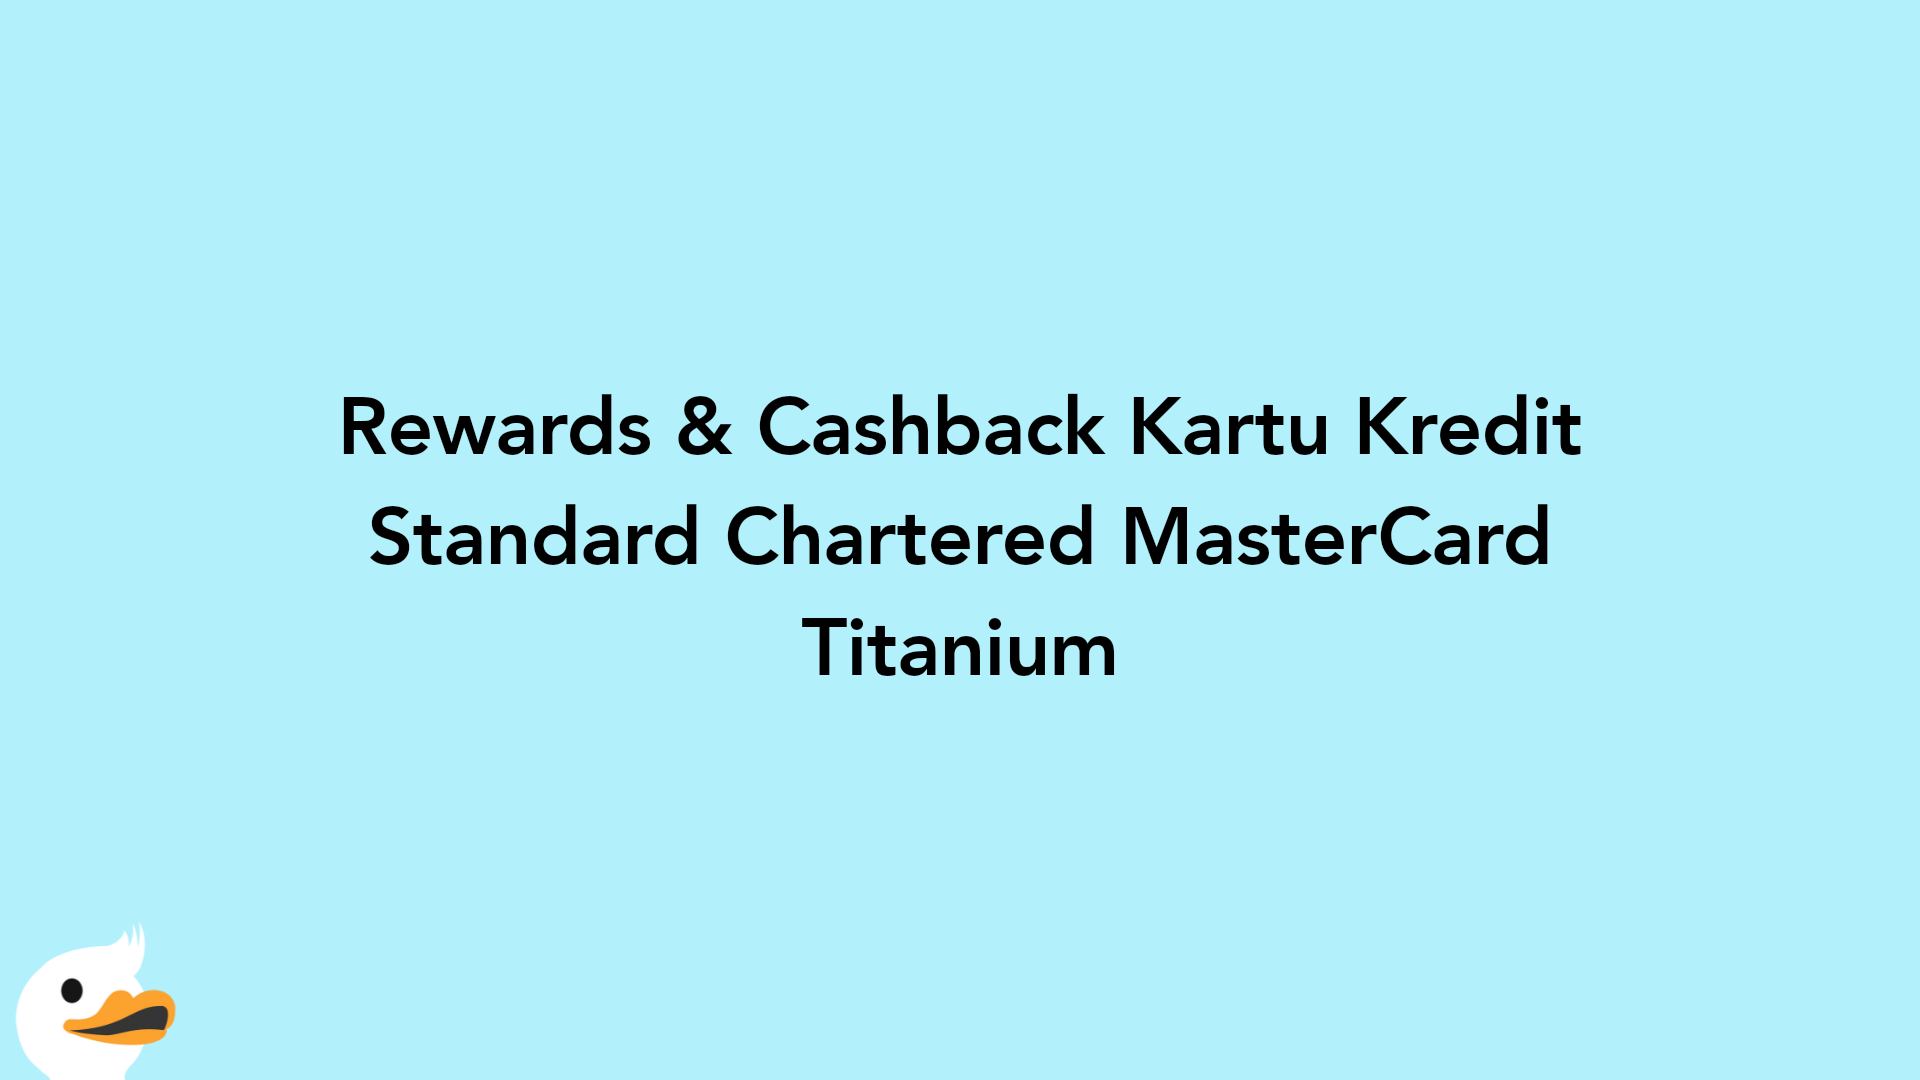 Rewards & Cashback Kartu Kredit Standard Chartered MasterCard Titanium